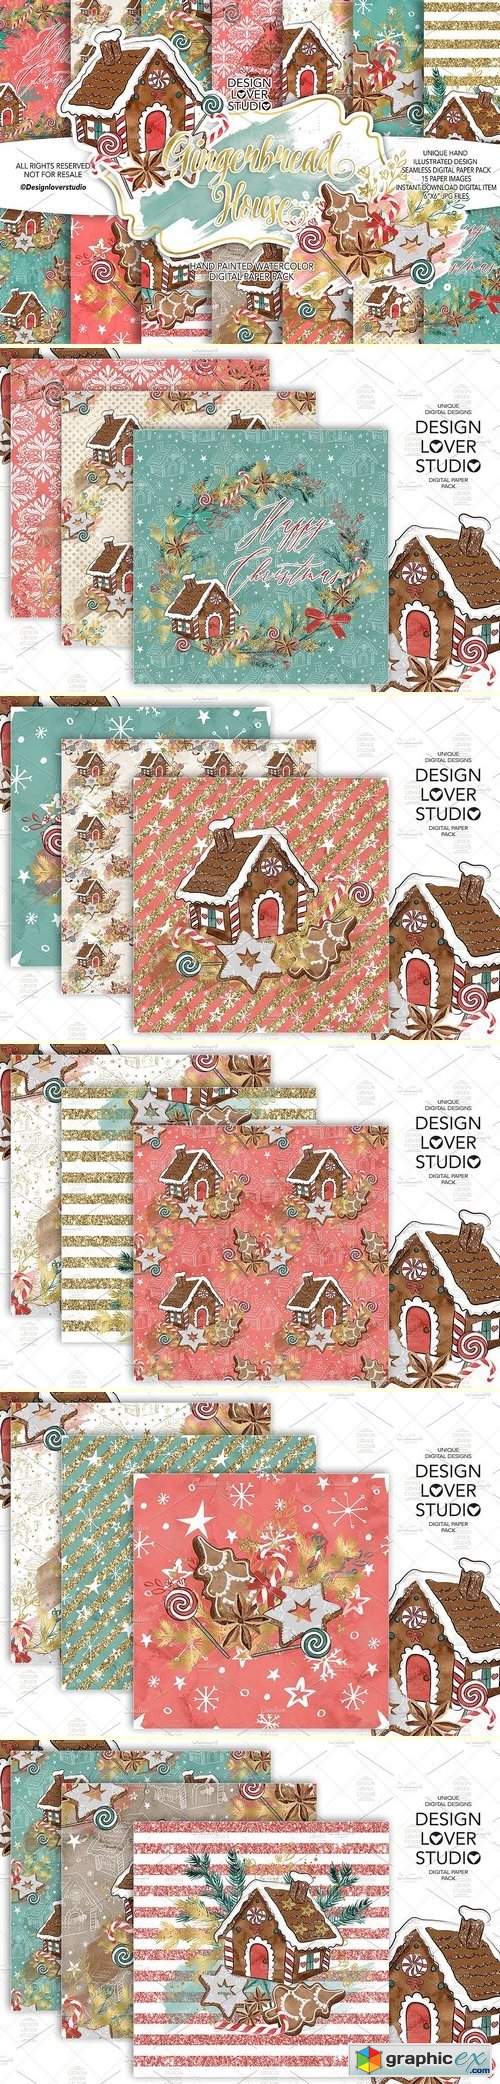 Gingerbread house digital paper pack